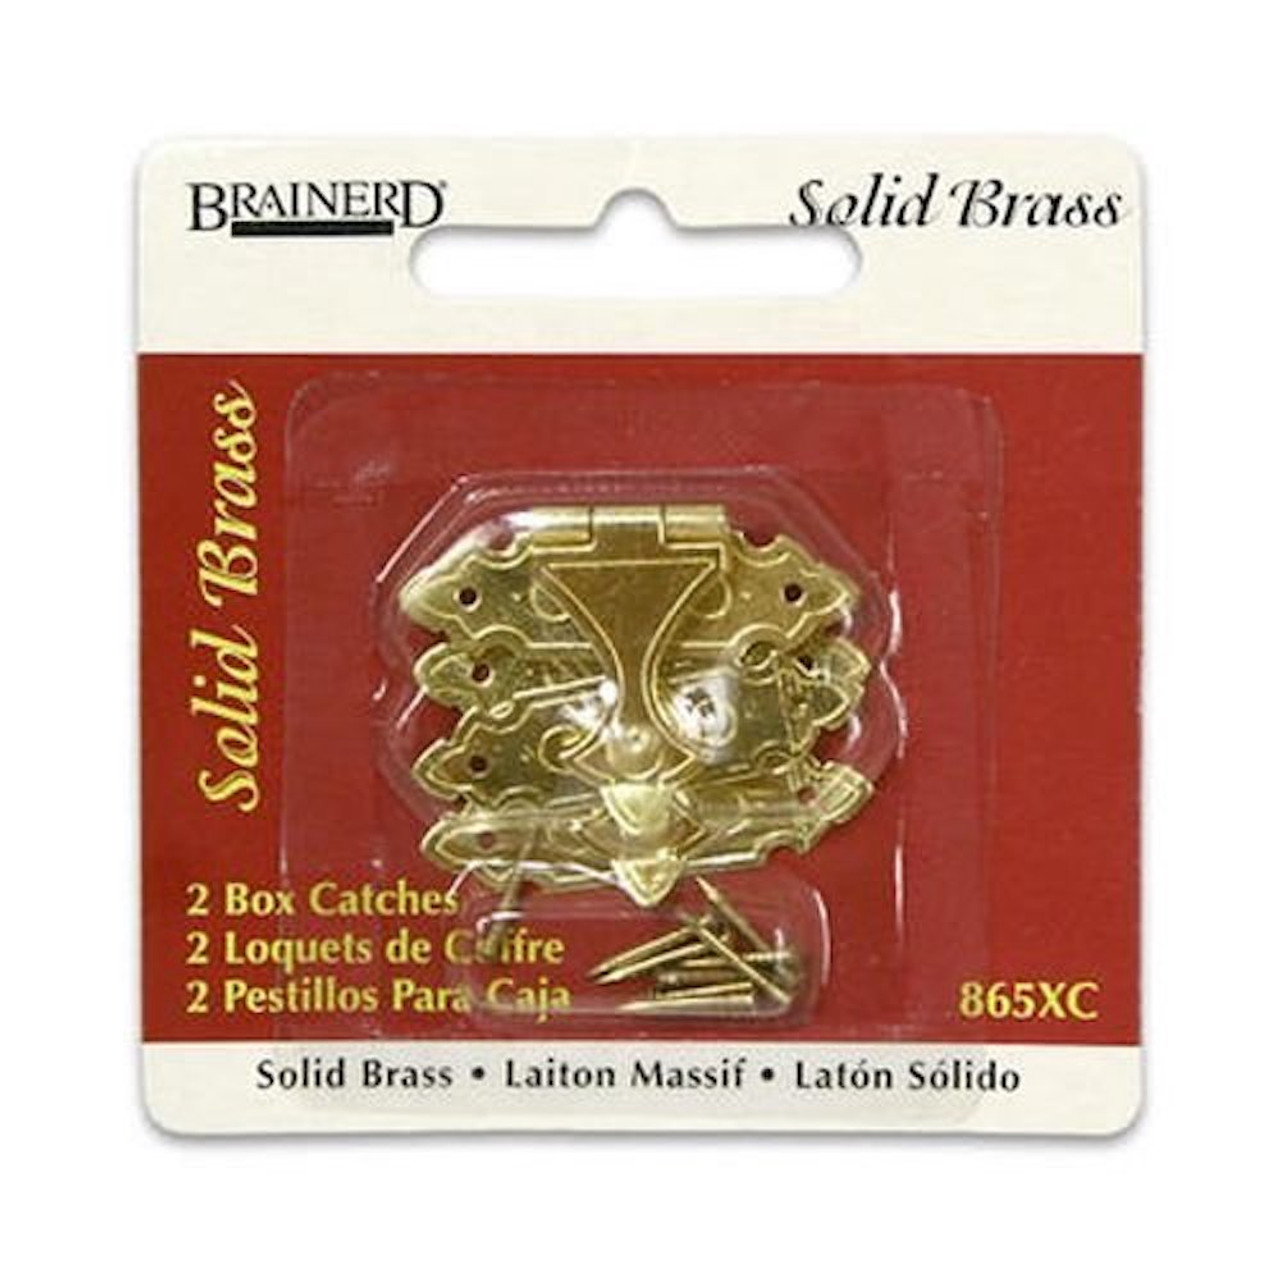 Brainerd 865XC Box Catch Solid Brass Pack of 2